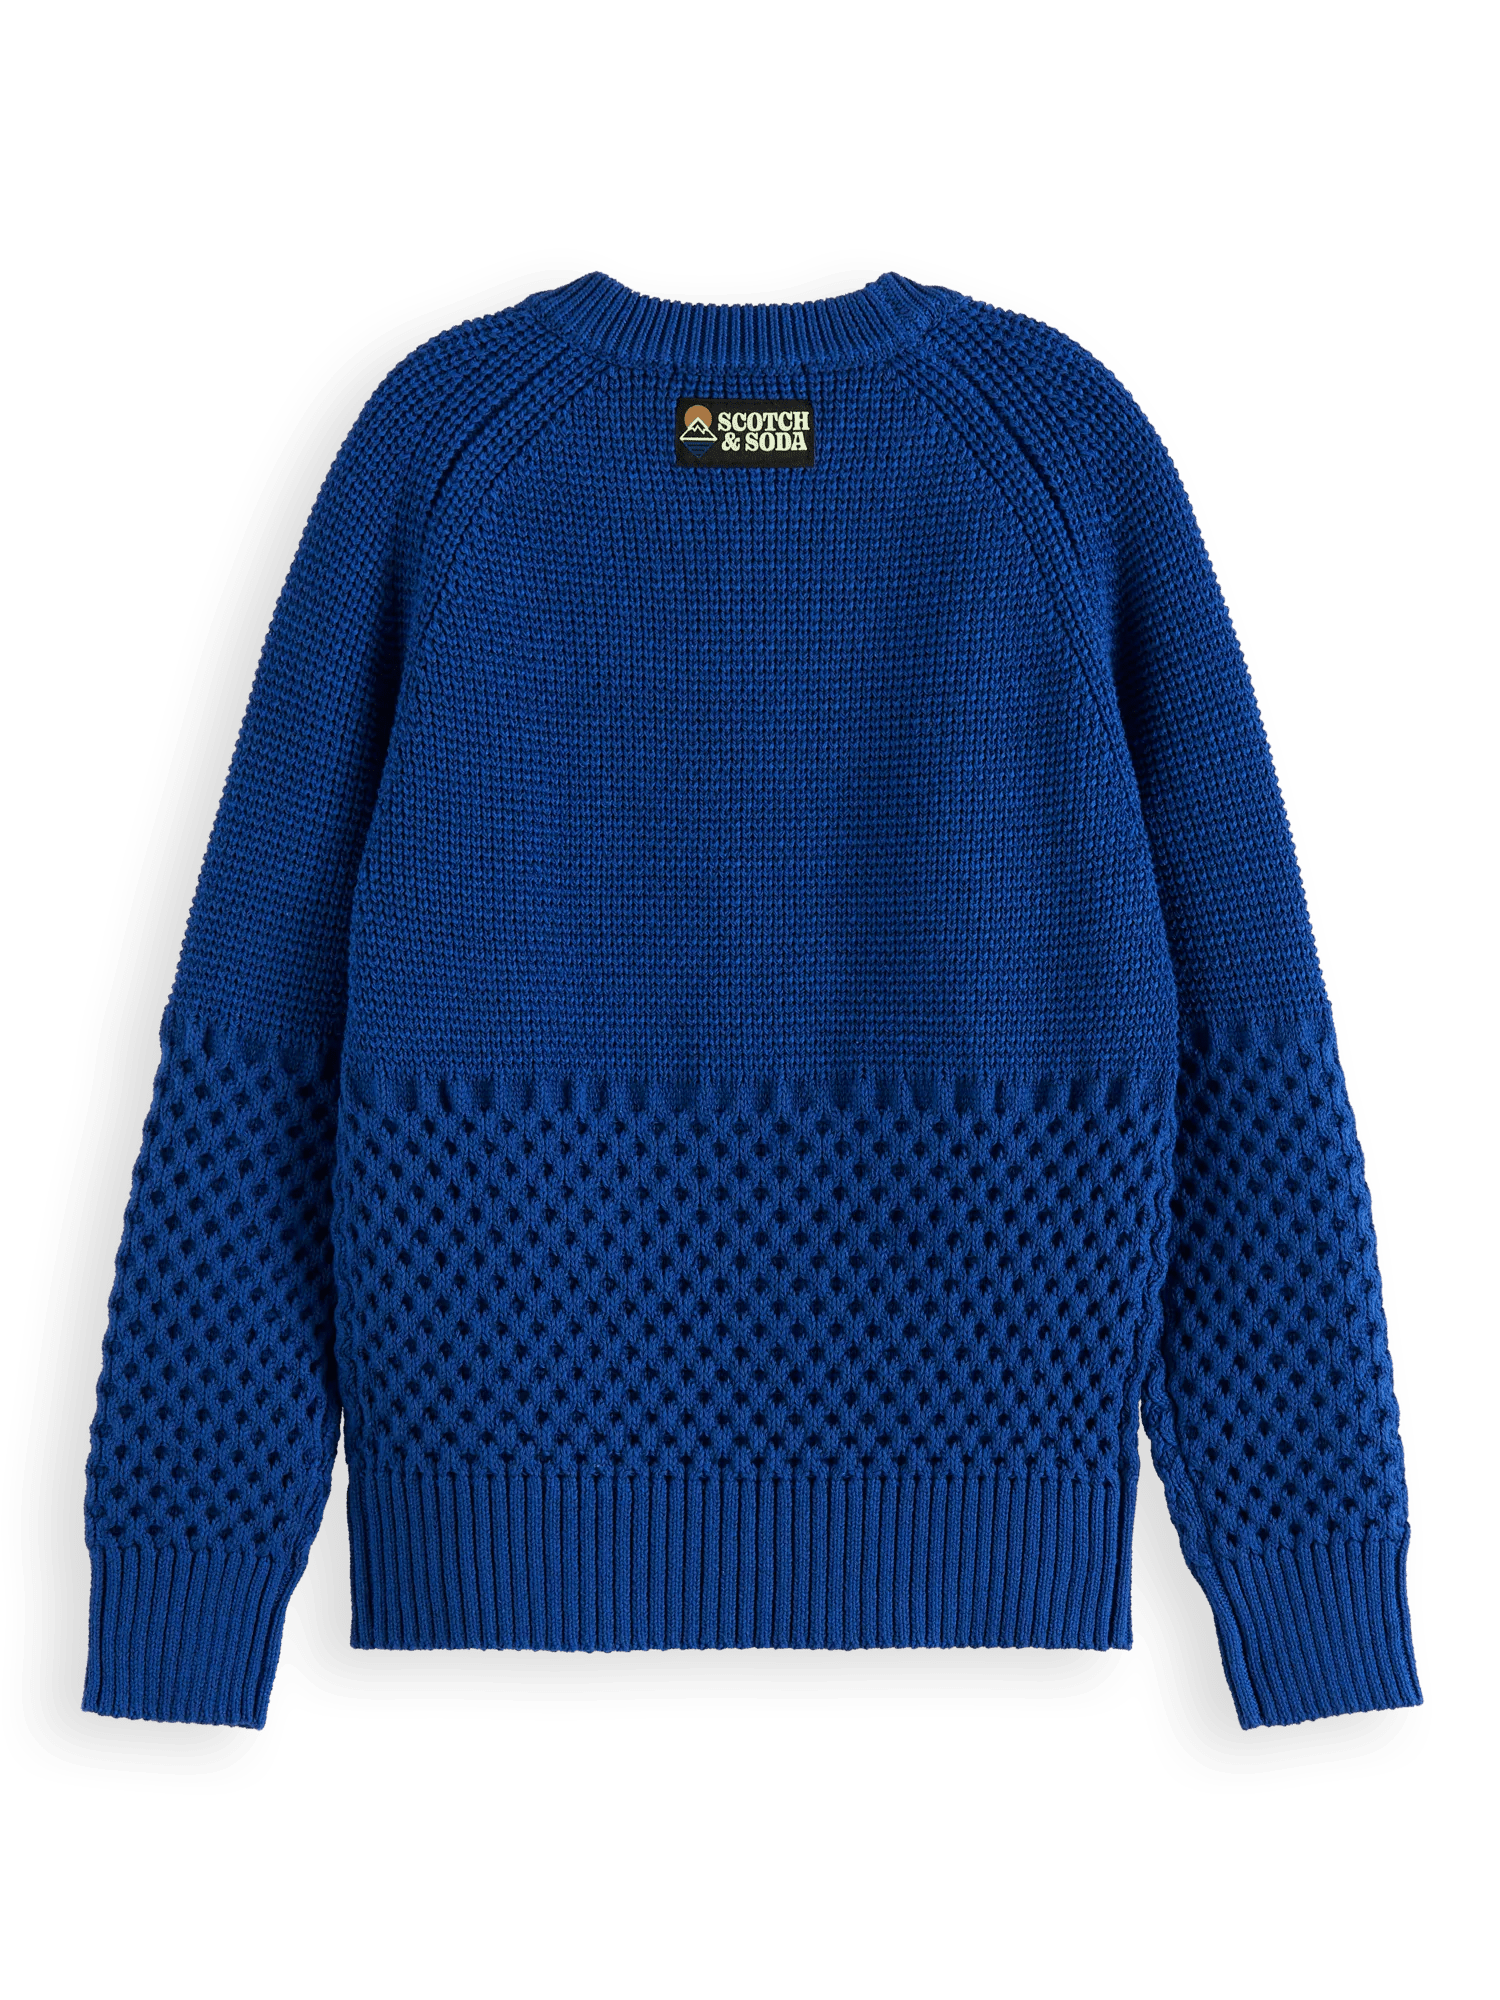 Scotch & Soda Cable knit sweater BCK